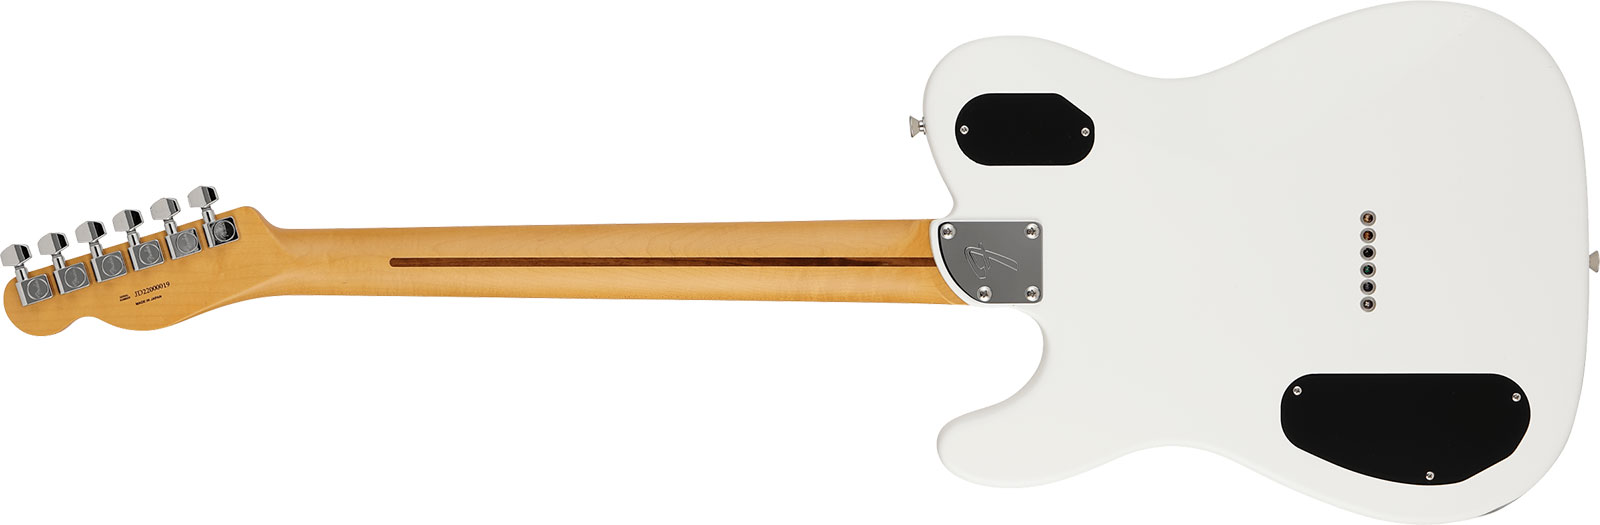 Fender Tele Elemental Mij Jap 2h Ht Rw - Nimbus White - Guitarra eléctrica con forma de tel - Variation 1